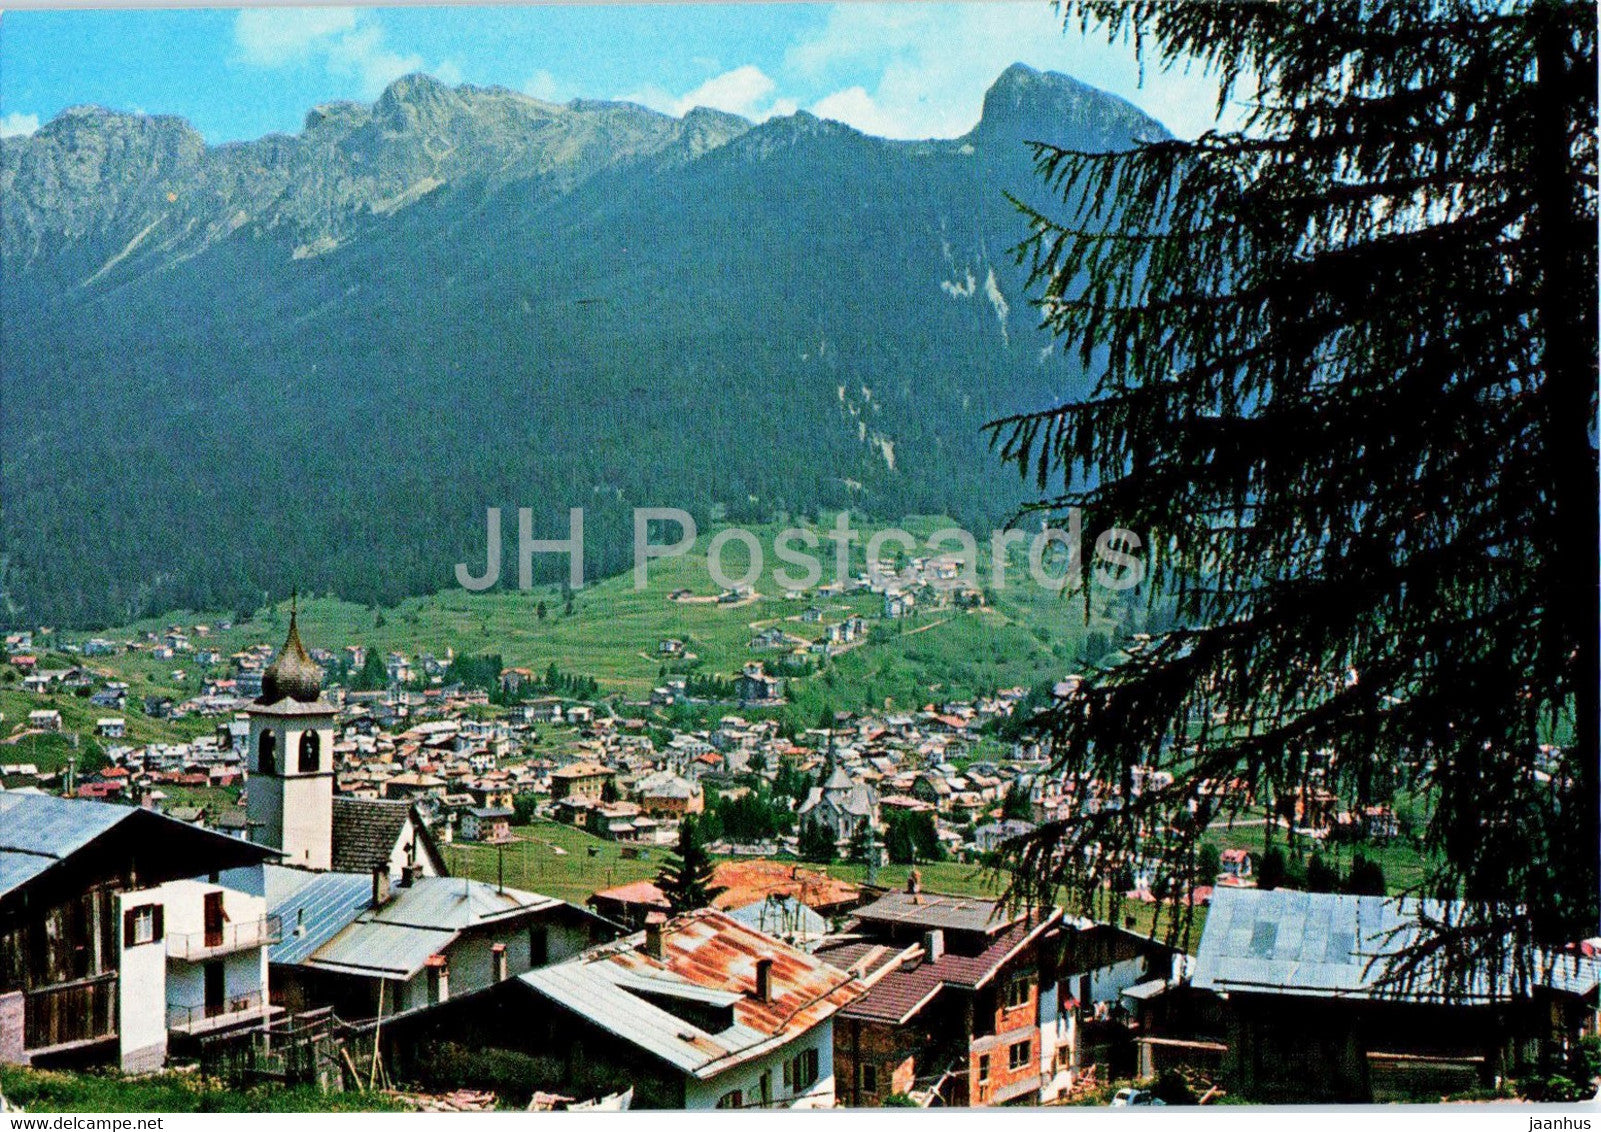 Dolomiti - Moena - Panorama - General view - Italy - unused - JH Postcards